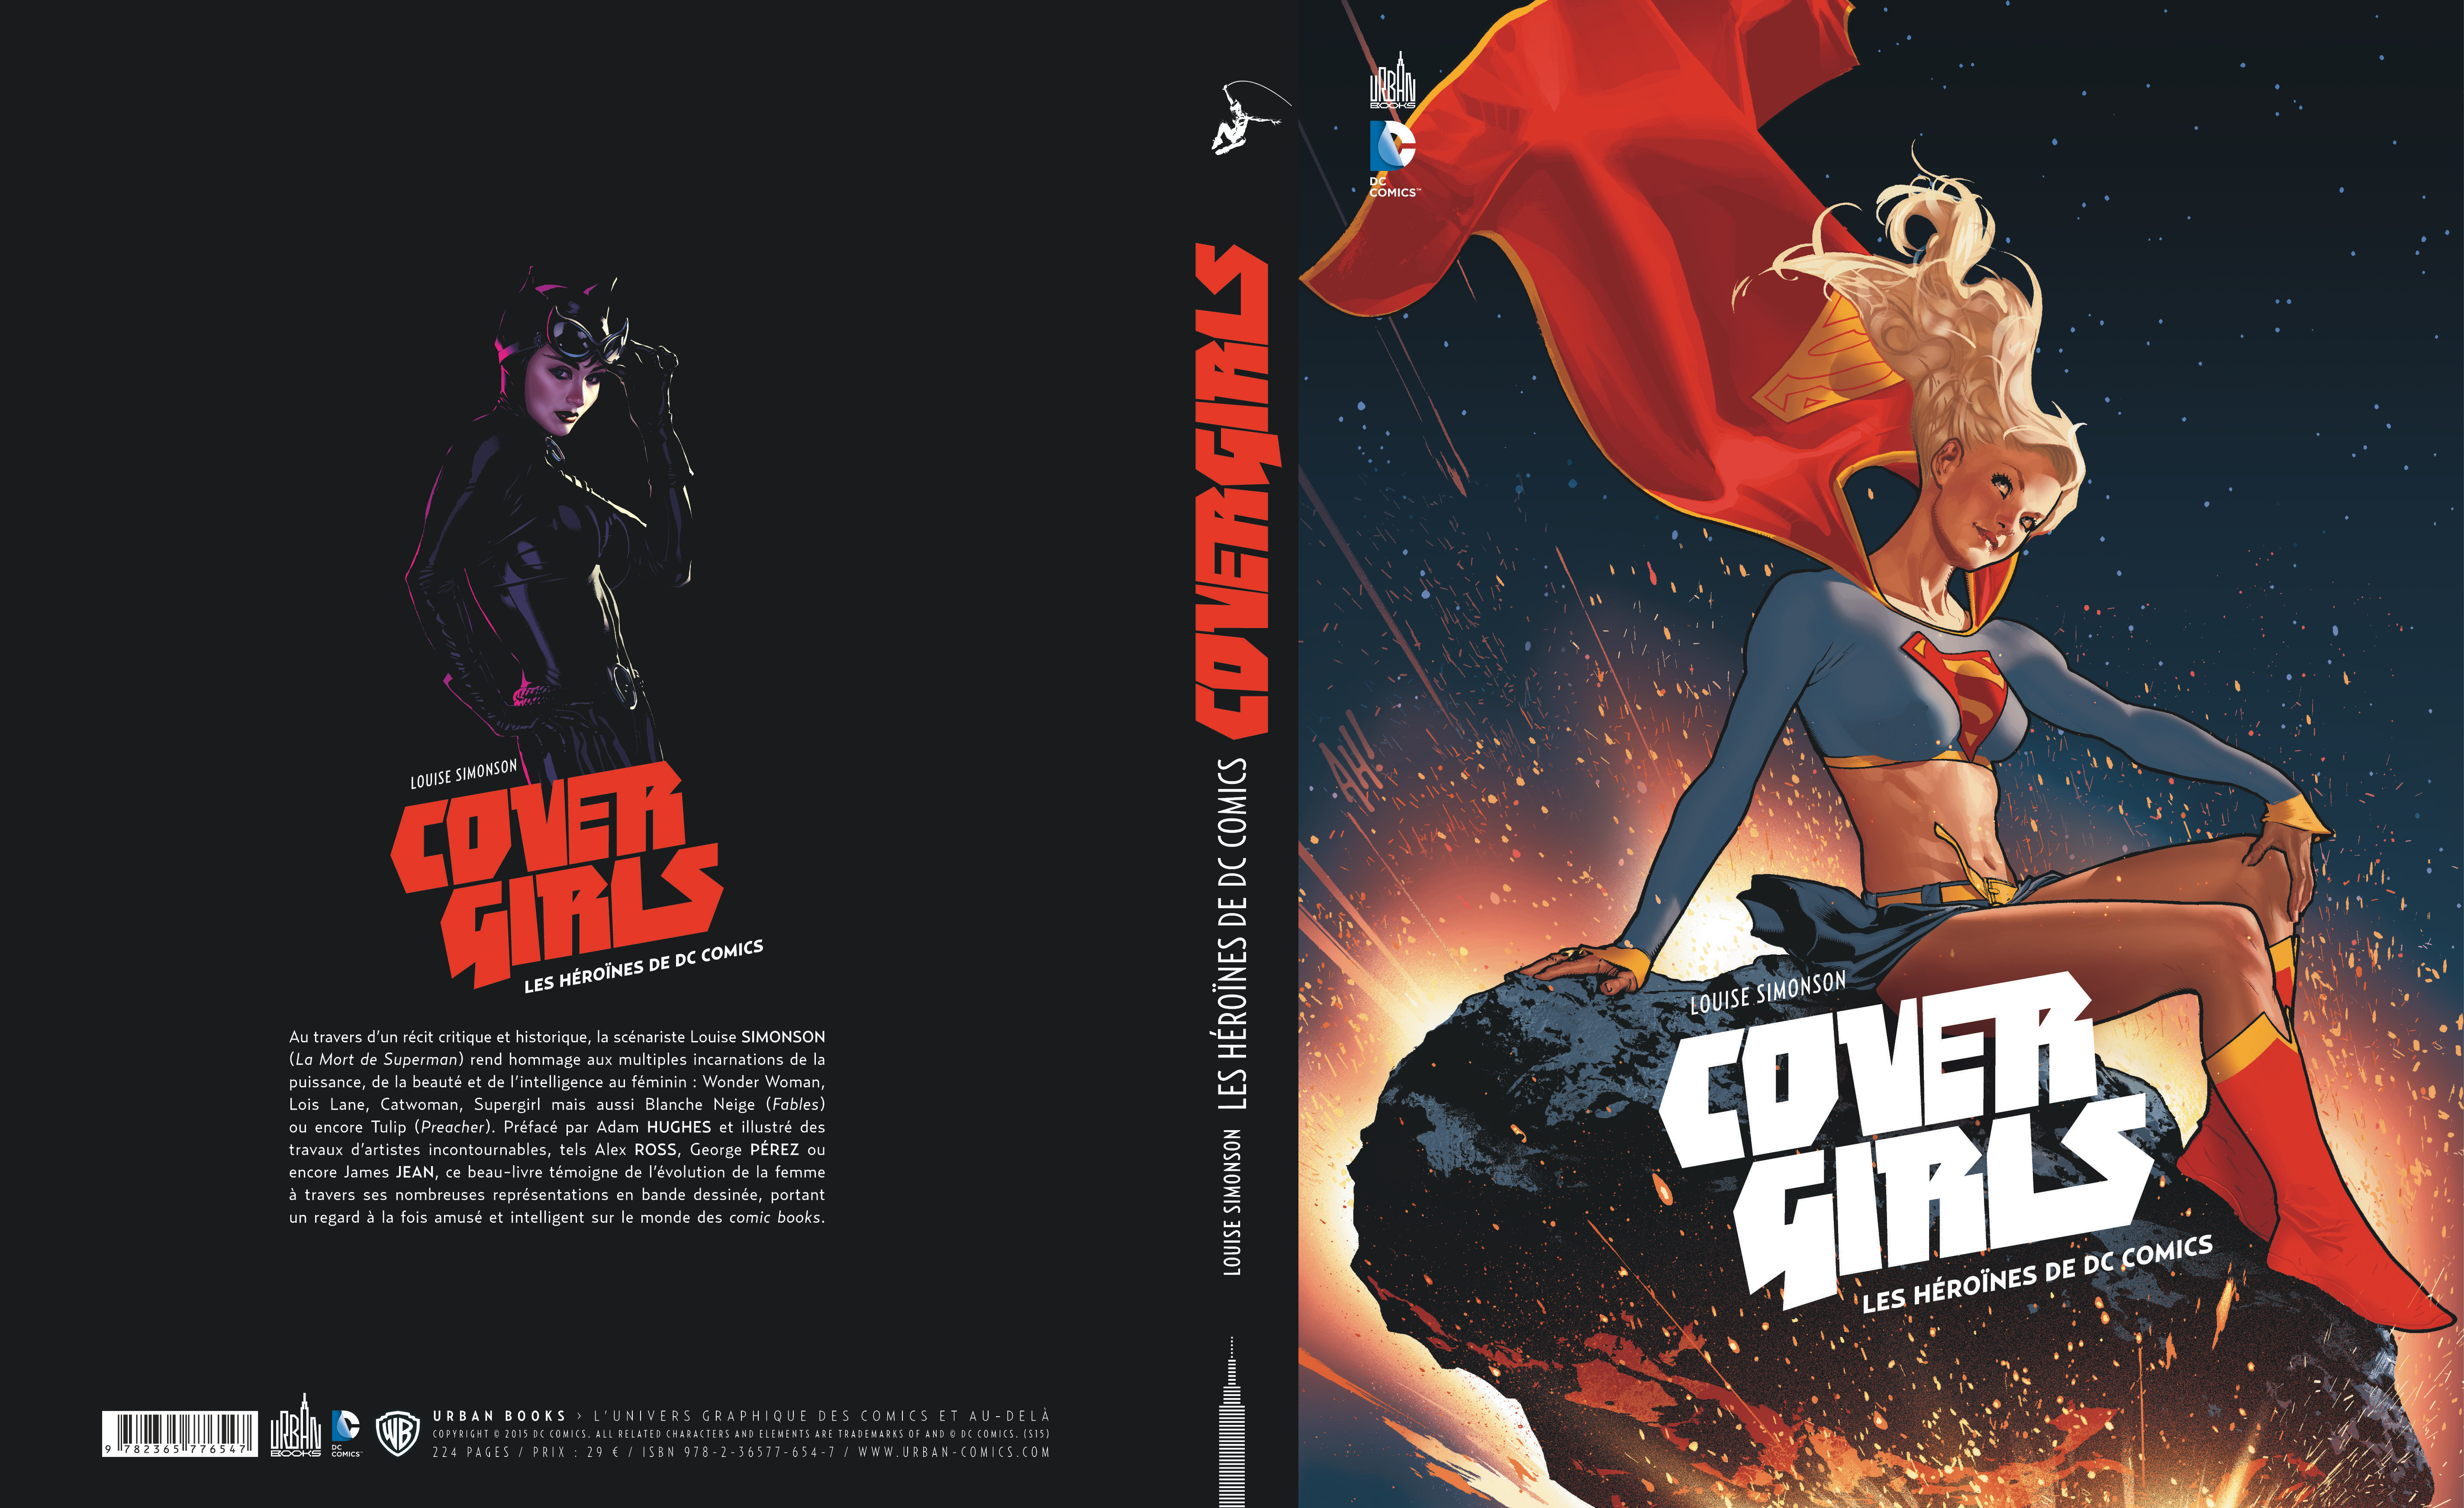 DC COVER GIRLS par Louise Simonson - 4eme